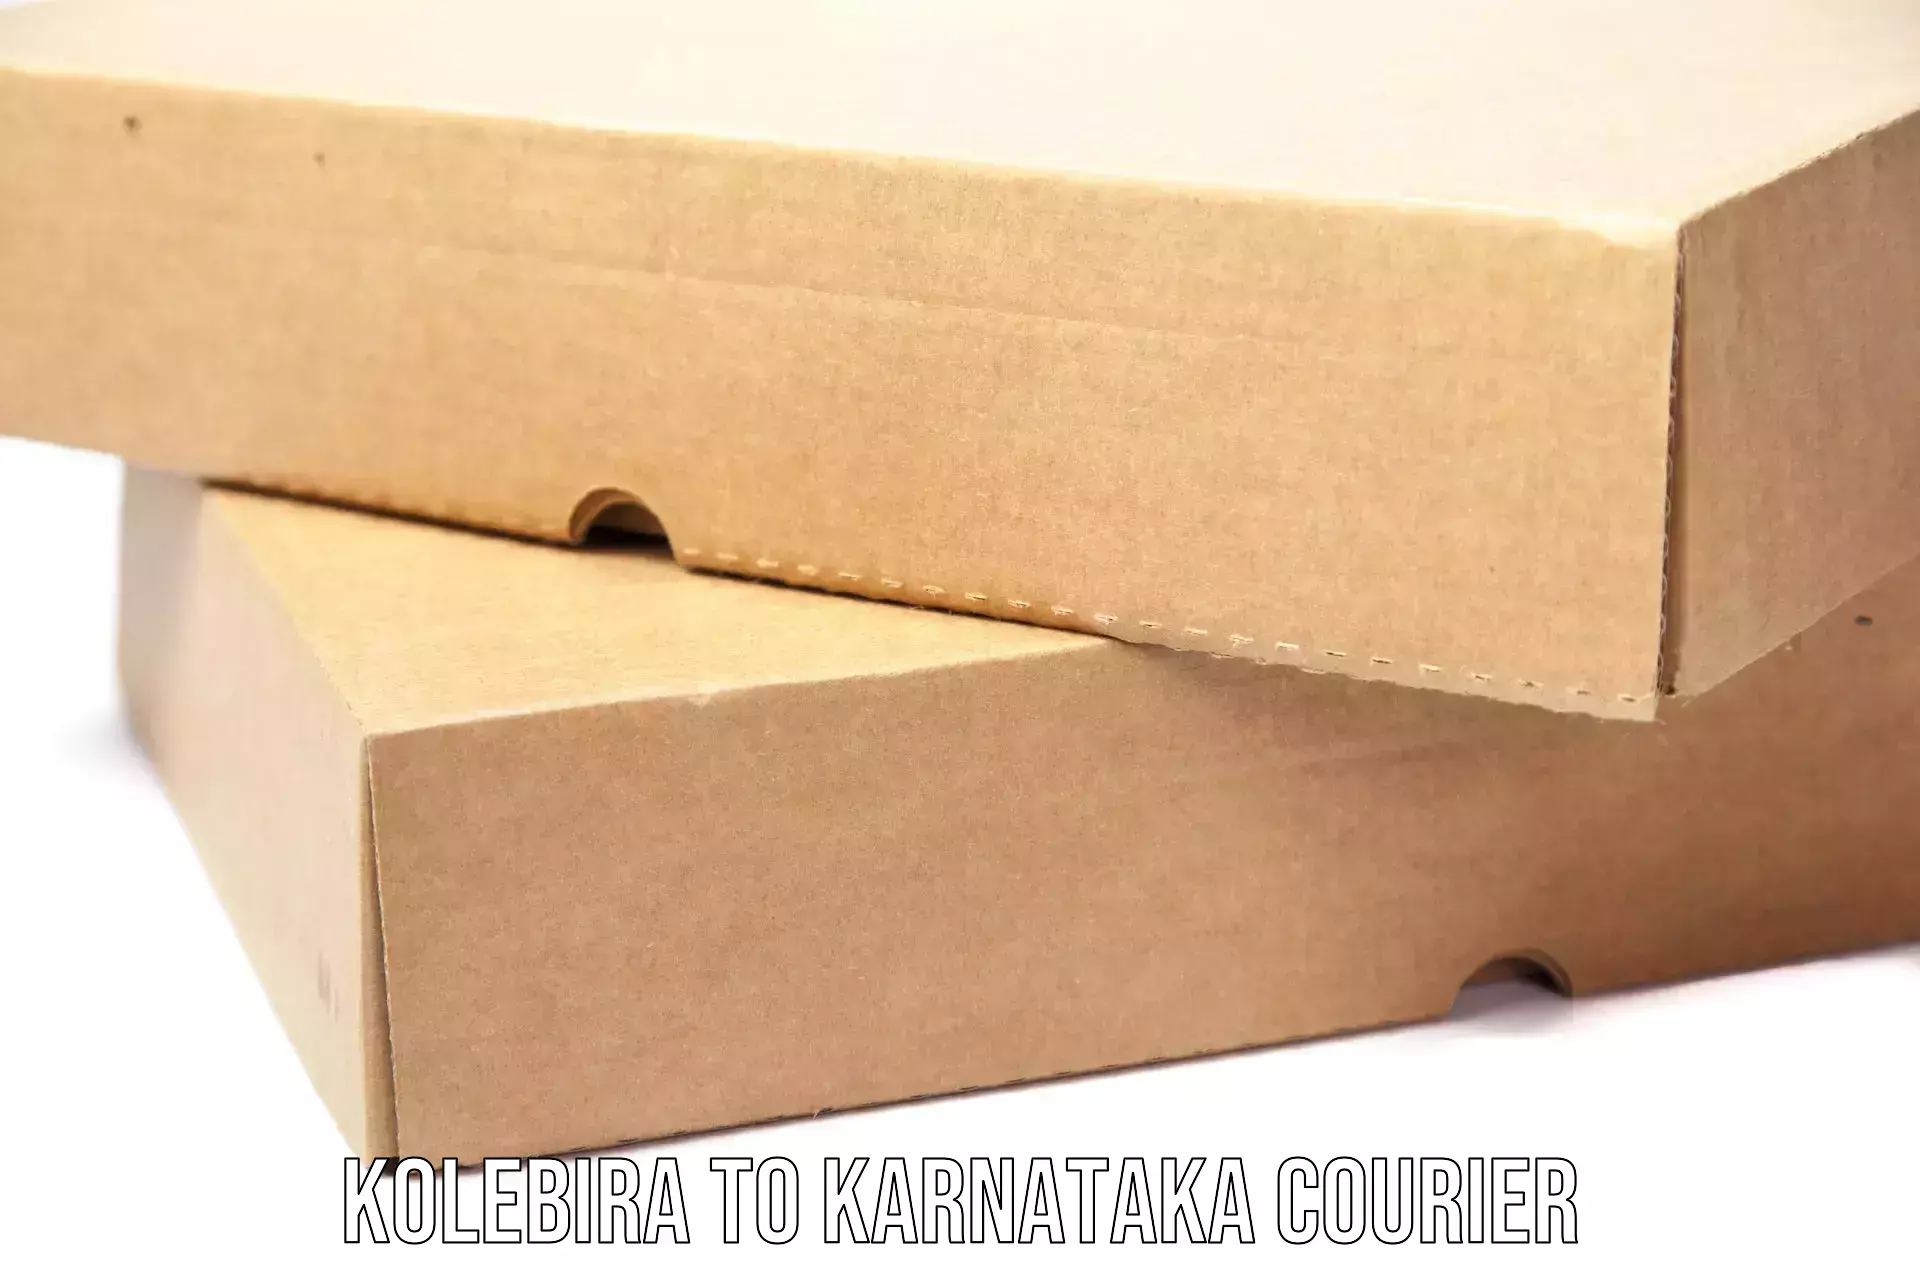 Full-service courier options Kolebira to Bangalore